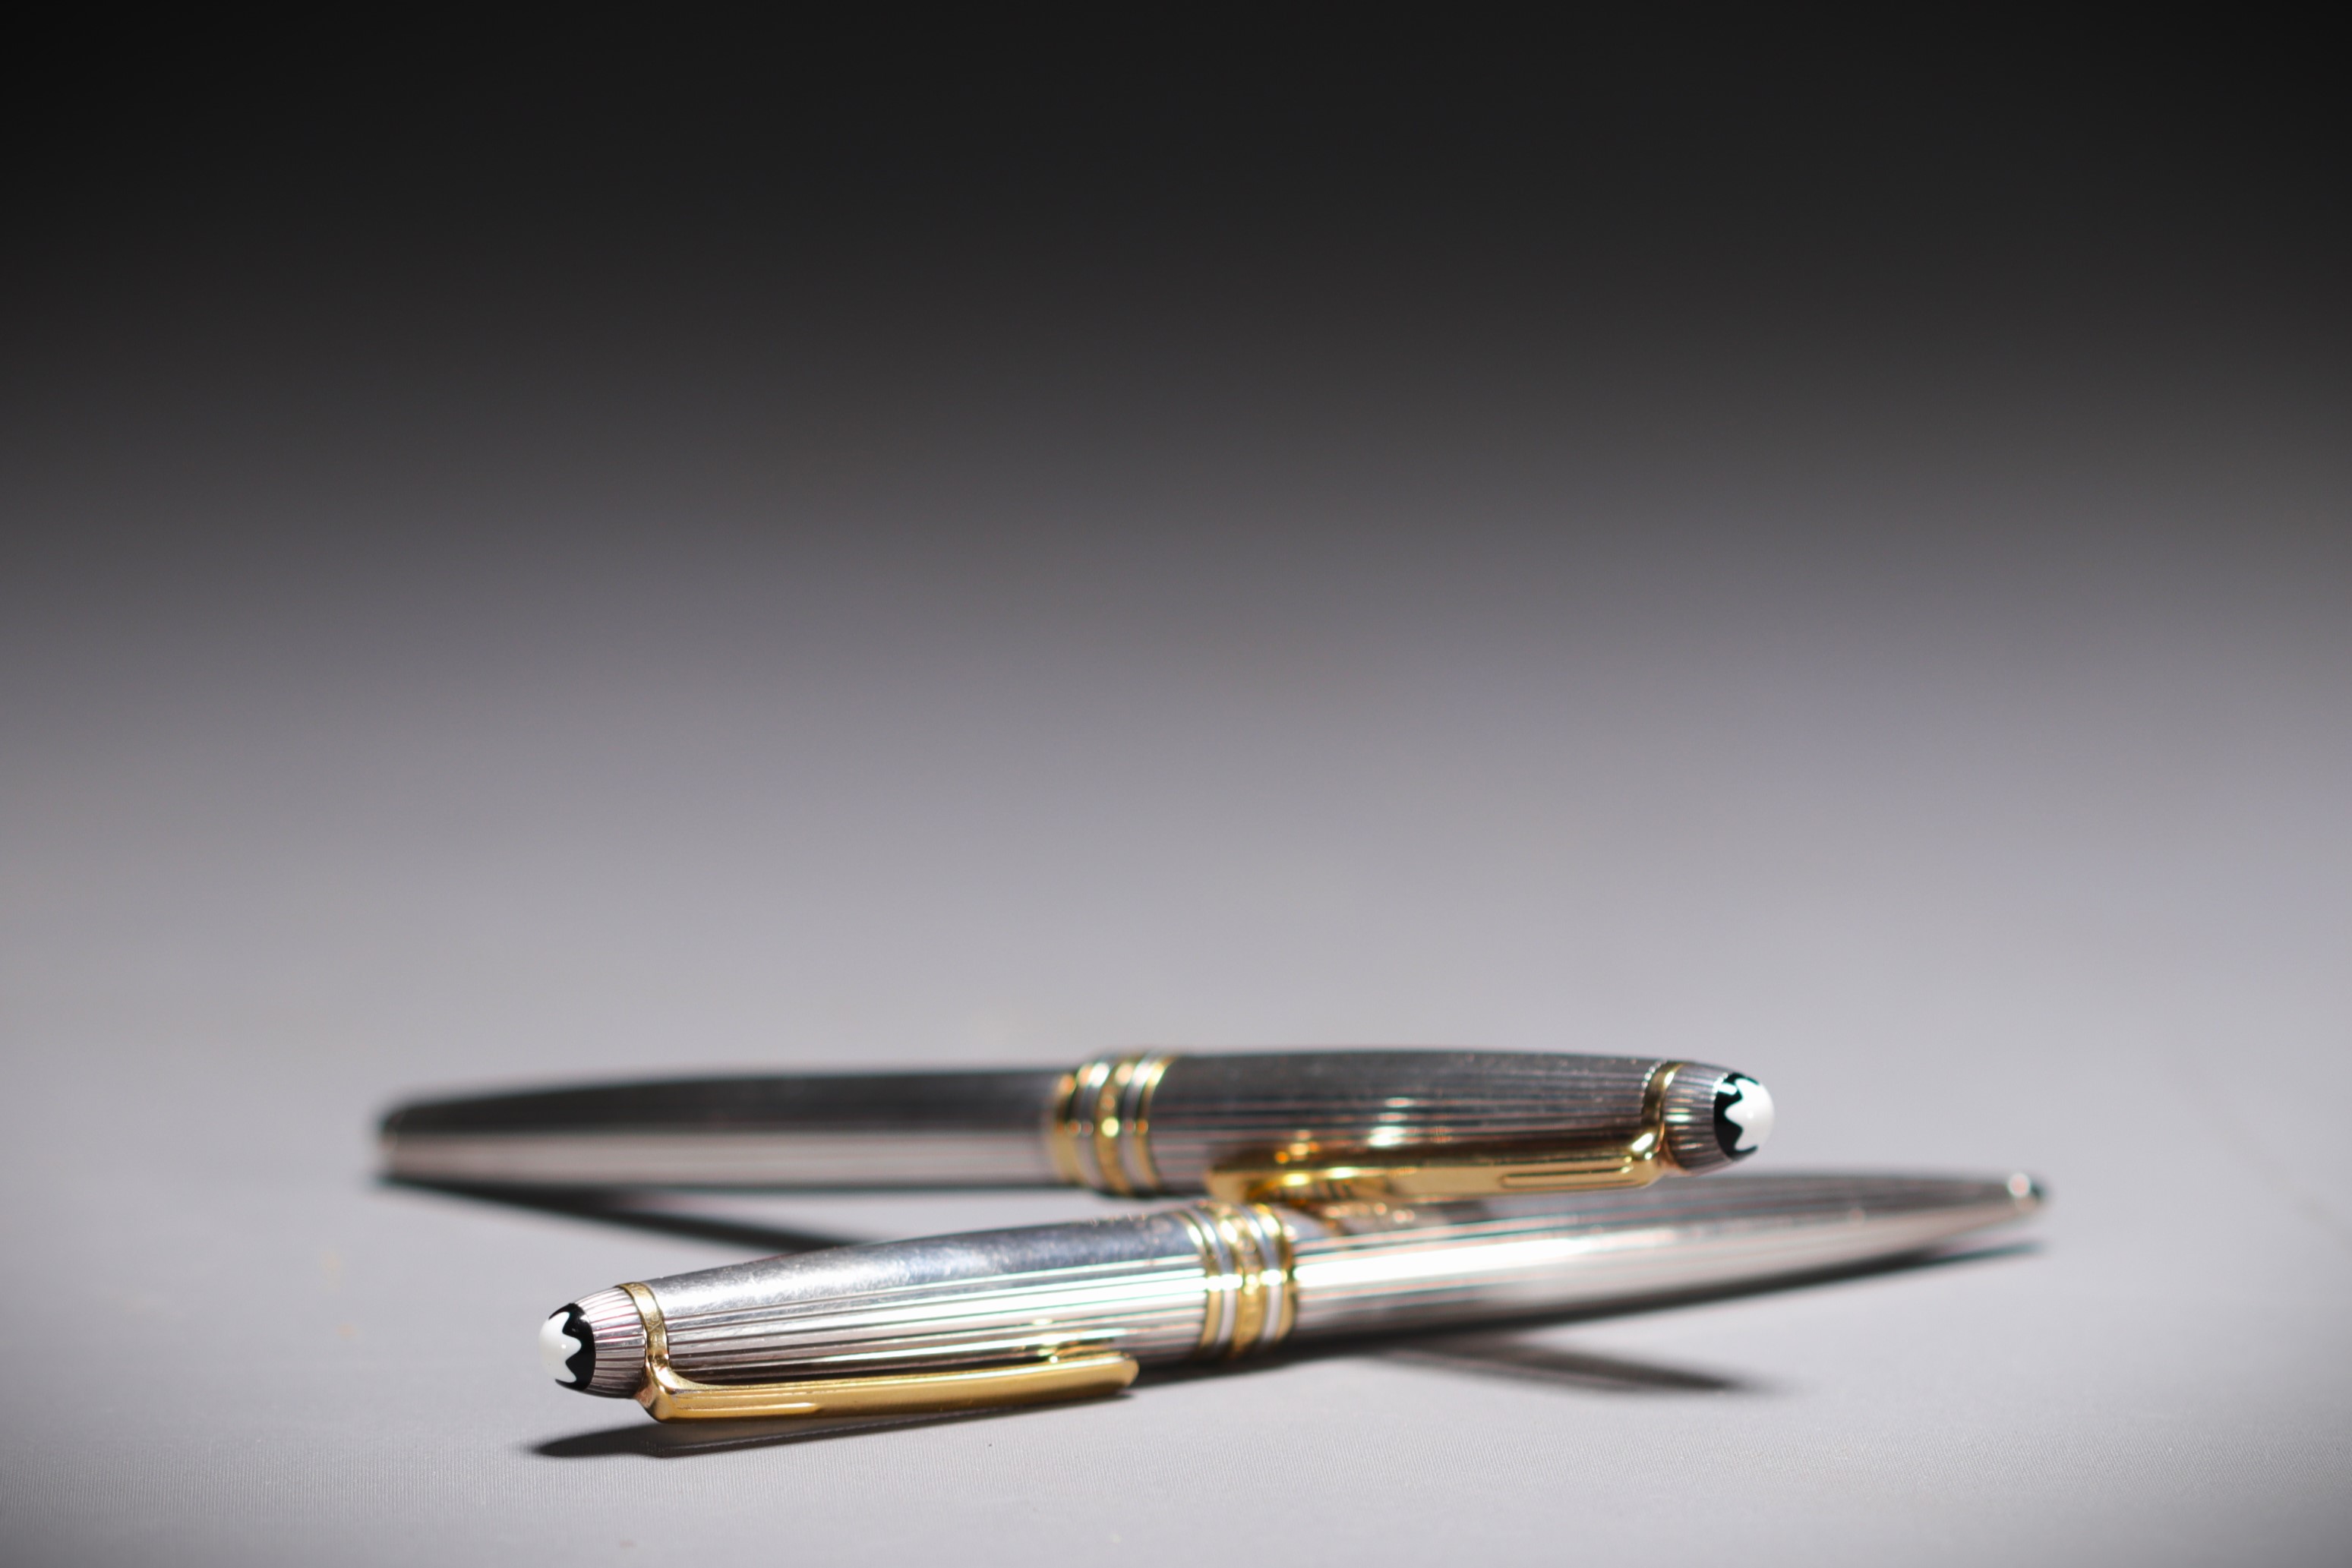 MONTBLANC - MEISTERSTUCK MOZART pen and nib holder set in sterling silver 925, 18K gold nib.